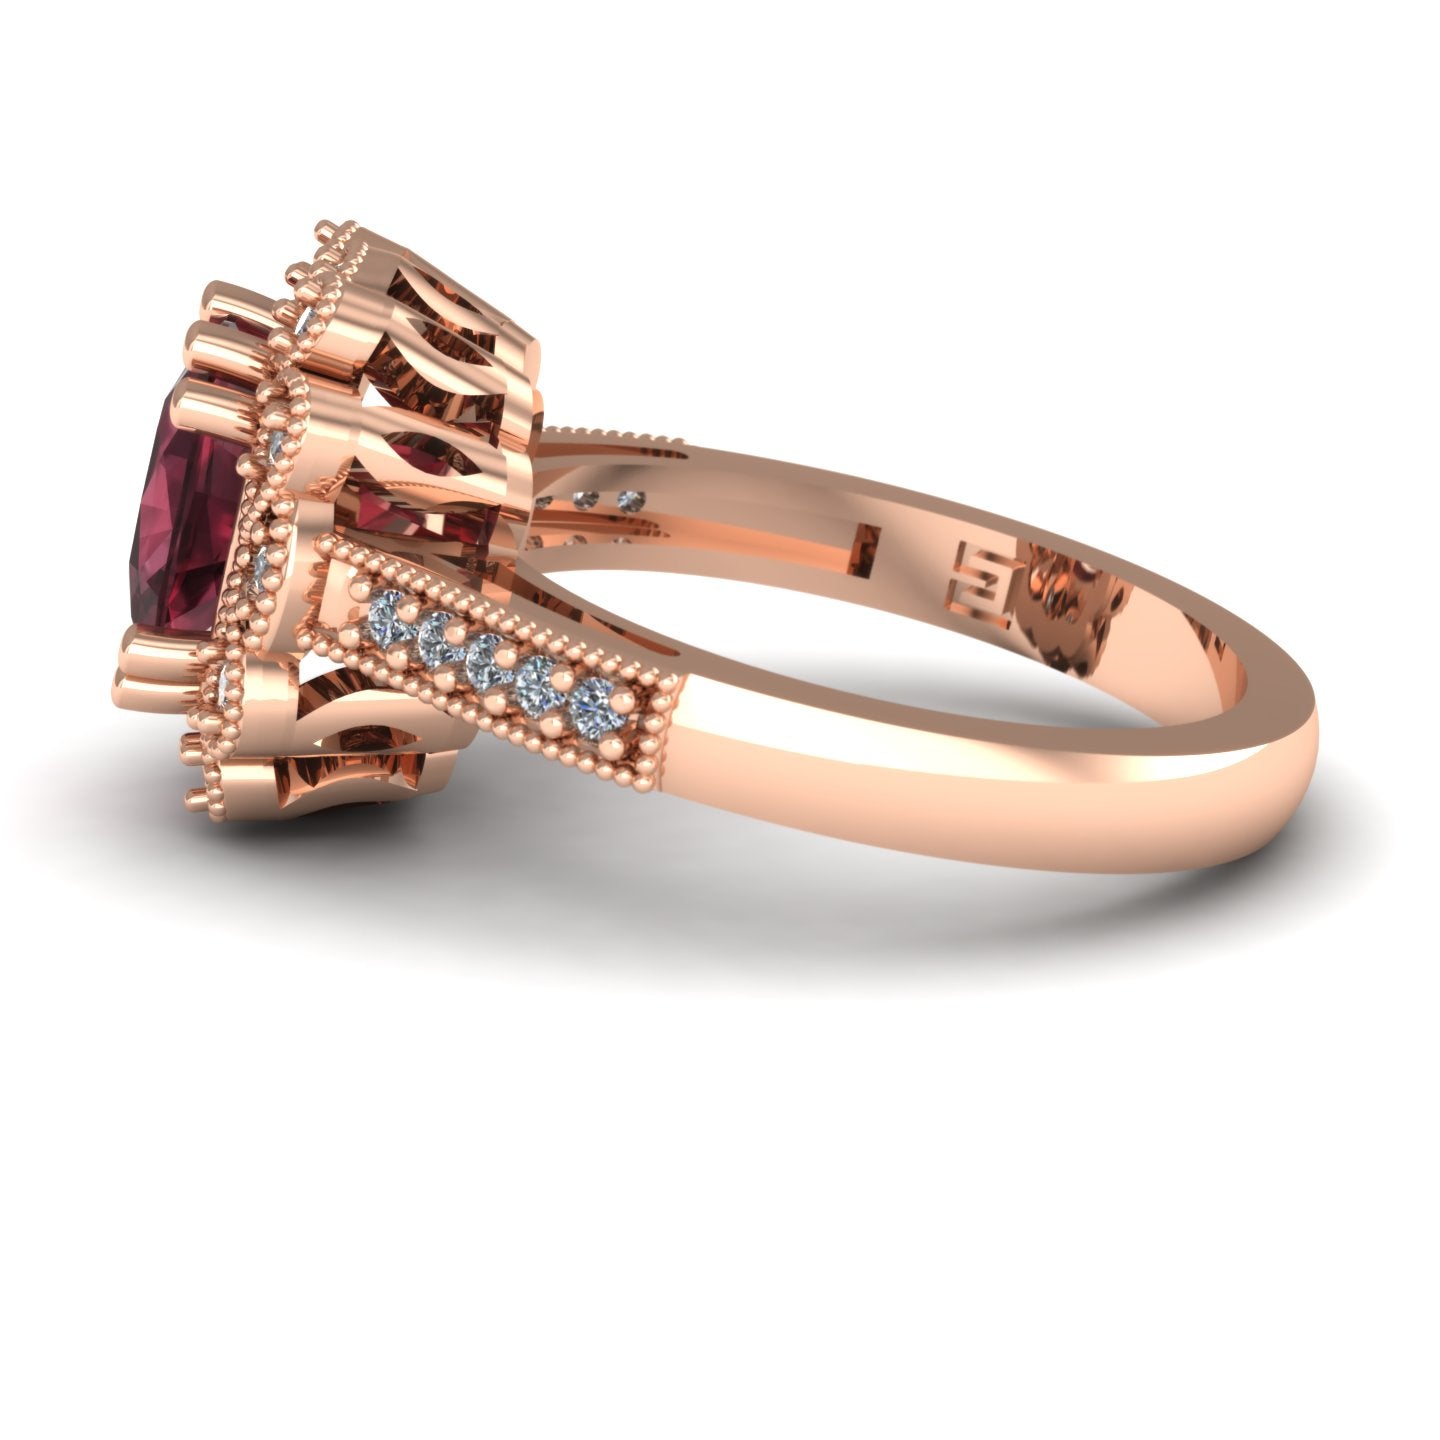 Rhodolite garnet and diamond vintage style ring in 14k rose gold